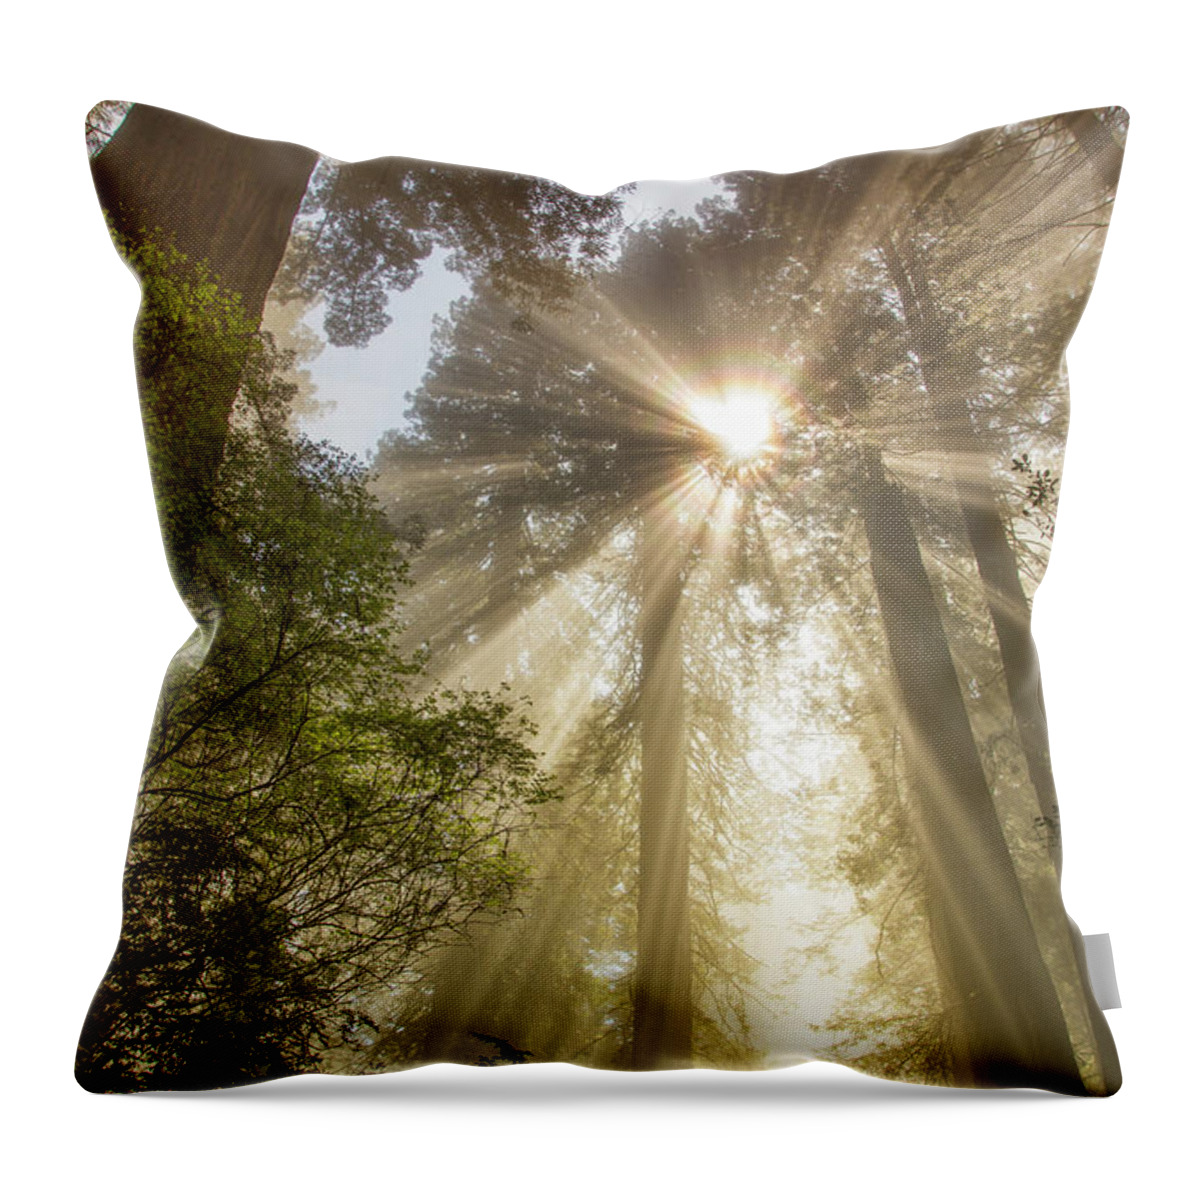 Redwoods Sunburst Throw Pillow featuring the photograph Redwoods sunburst #1 by Kunal Mehra